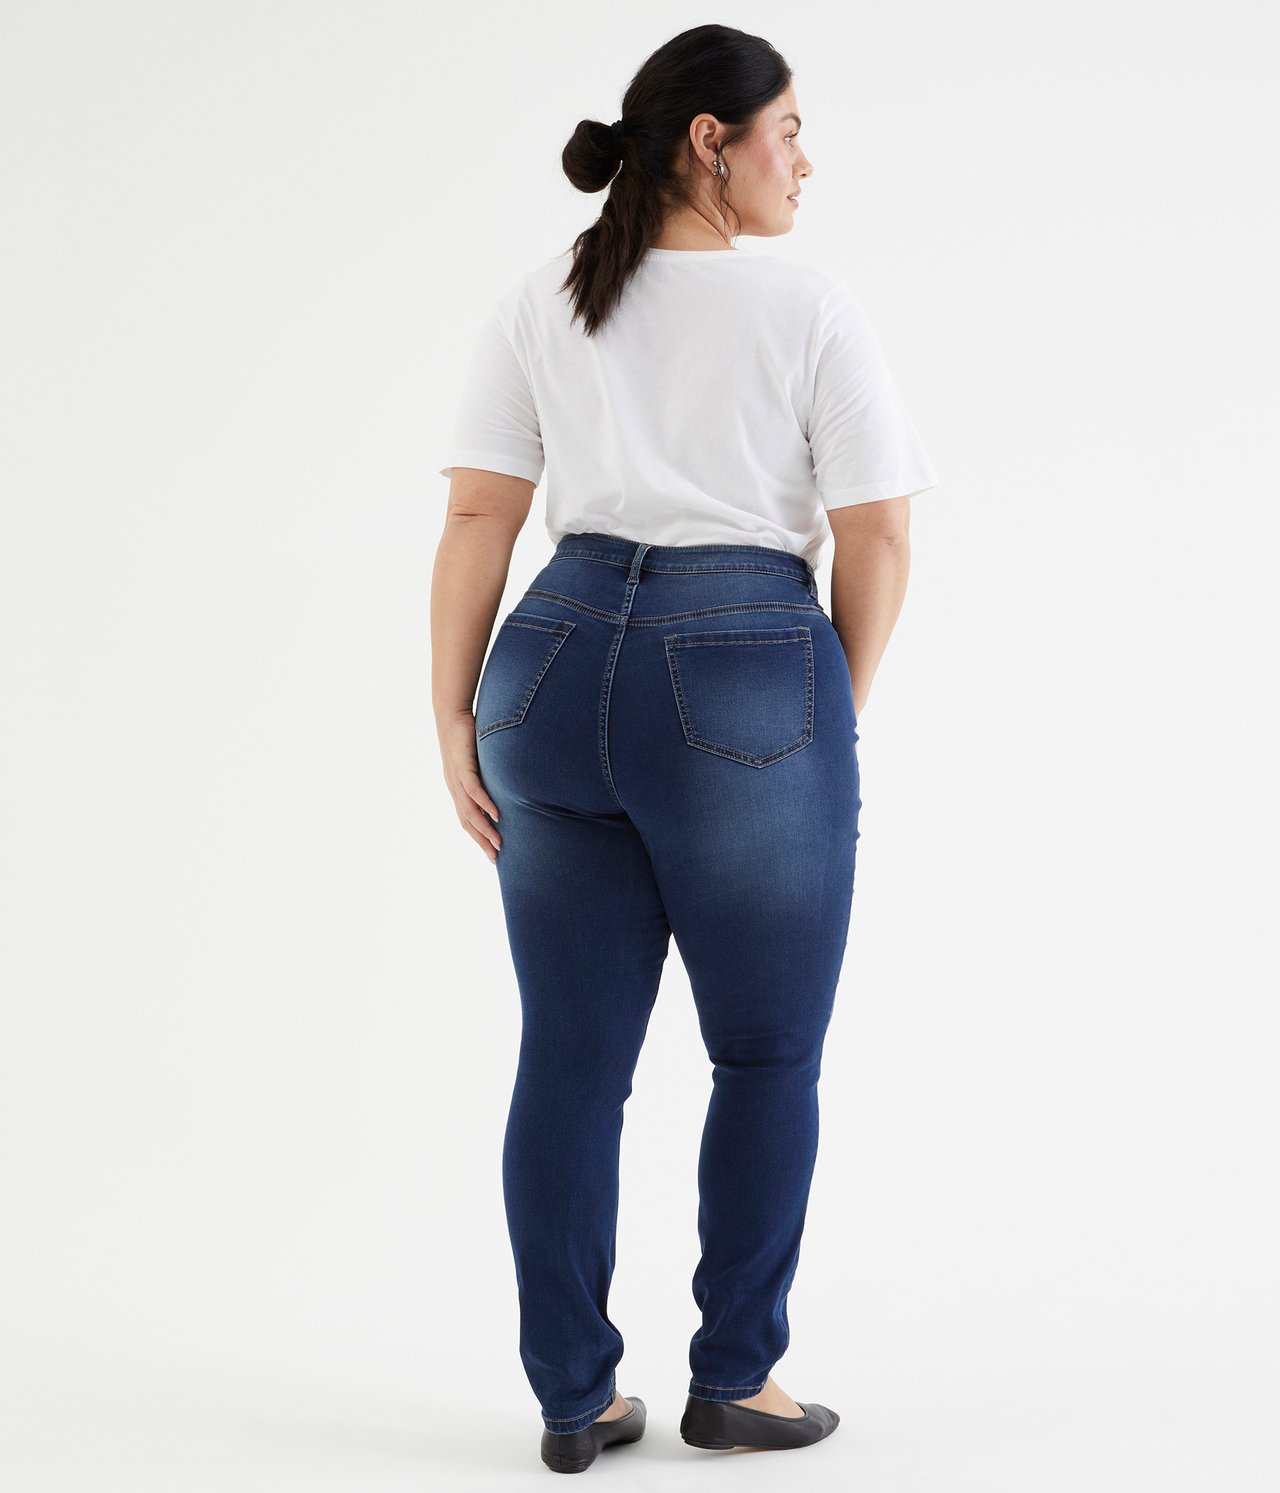 Ebba slim jeans extra long leg Tumma denimi - null - 3